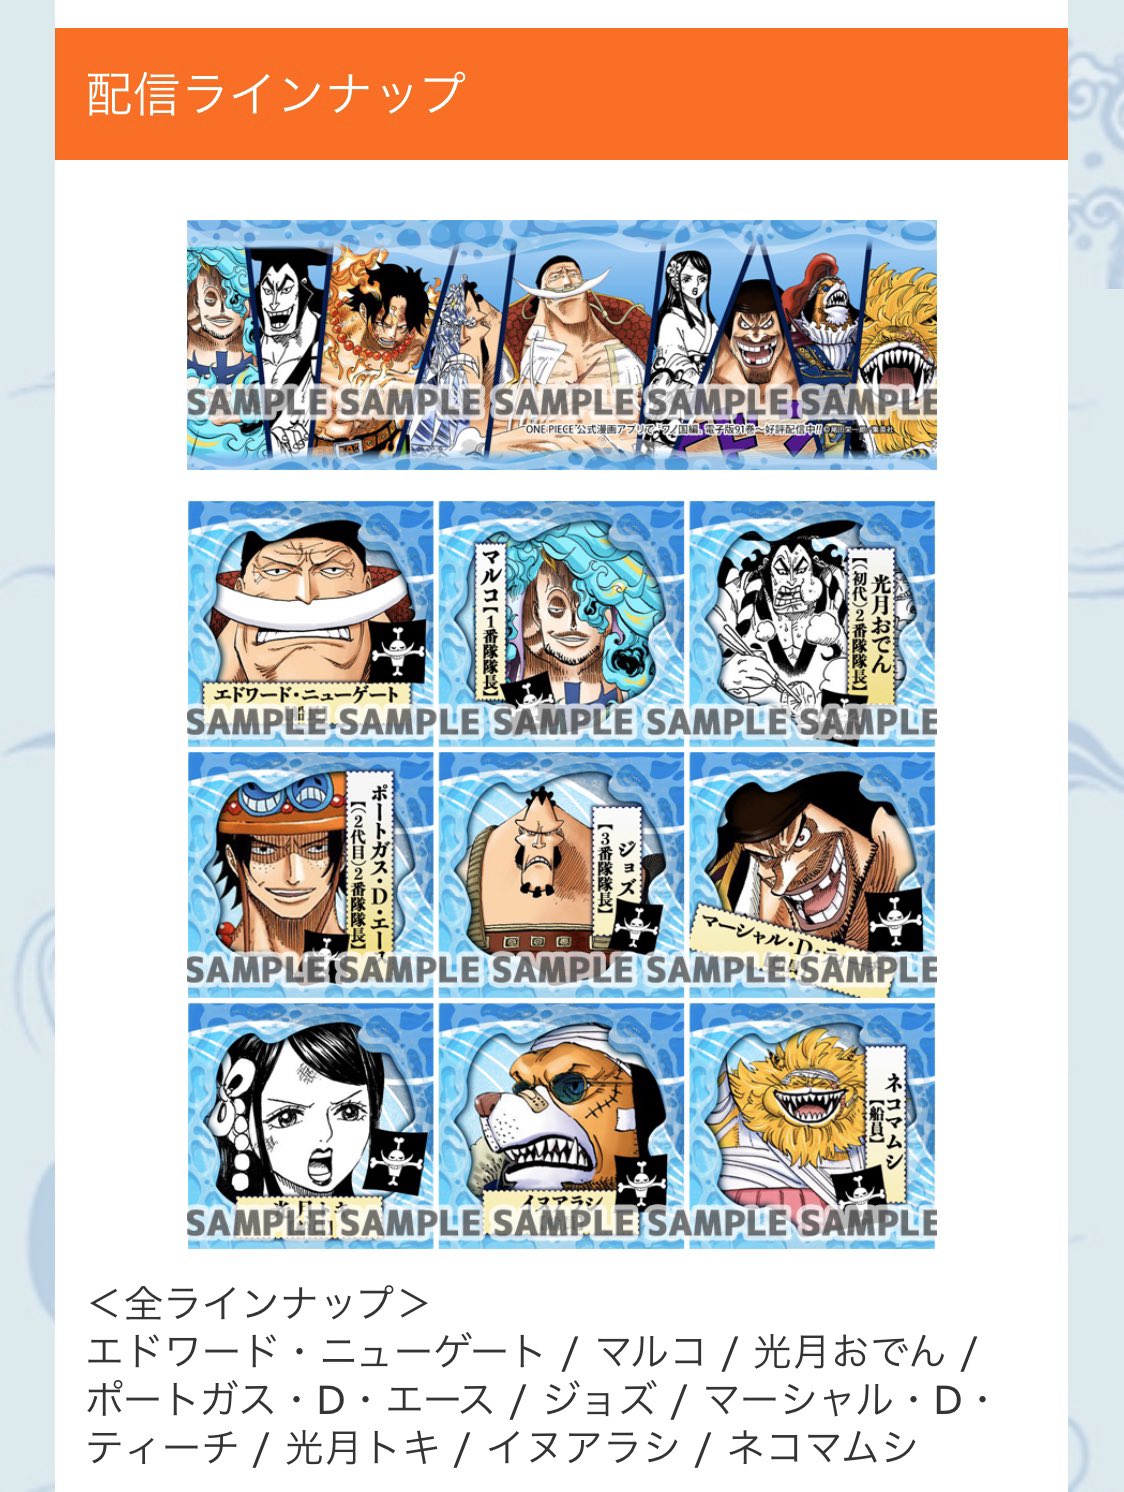 Kei One Piece垢 Yuri Satuki 左上のone Piece公式漫画アプリからもらえますよ 96巻のカバーをめくってイラストを撮影するとアイコンなどがダウンロードできます T Co 8wytjdbkcl Twitter